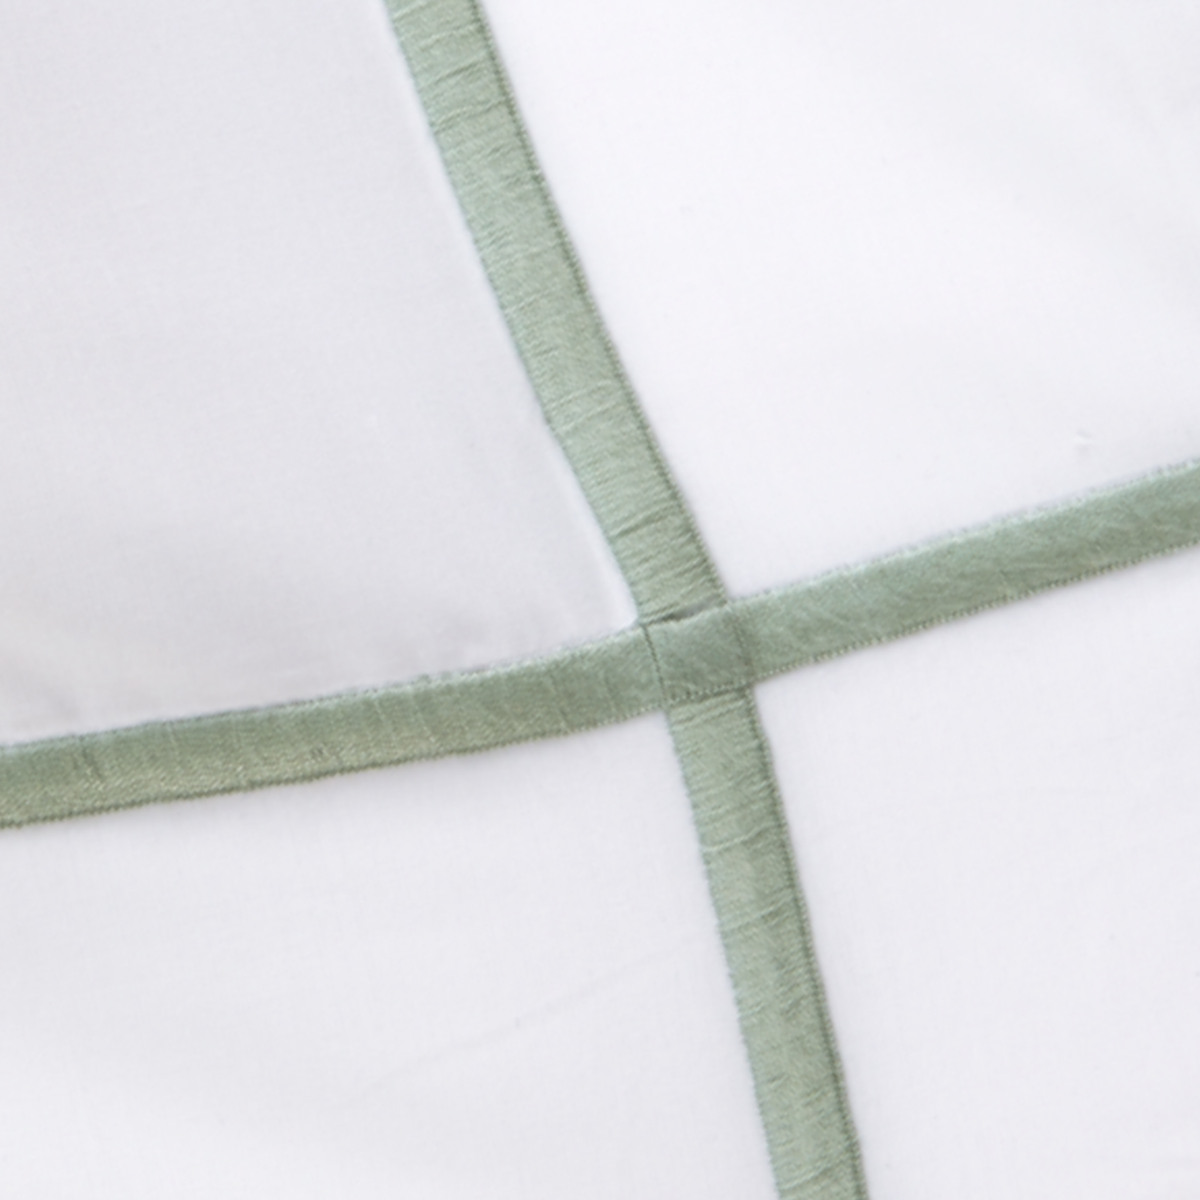 Fabric Closeup of Yves Delorme Athena Bedding in Veronese Color